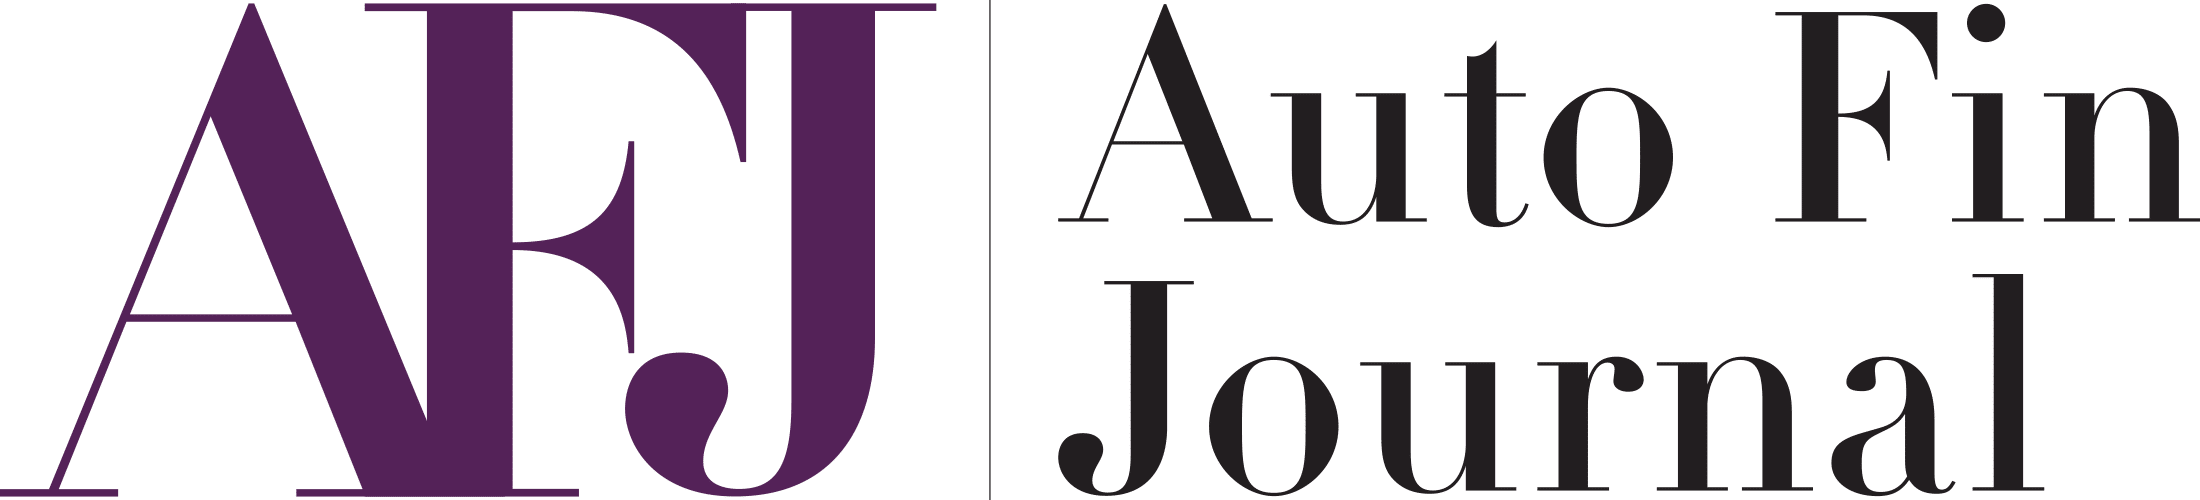 AFJ Auto Finance Journal Logo